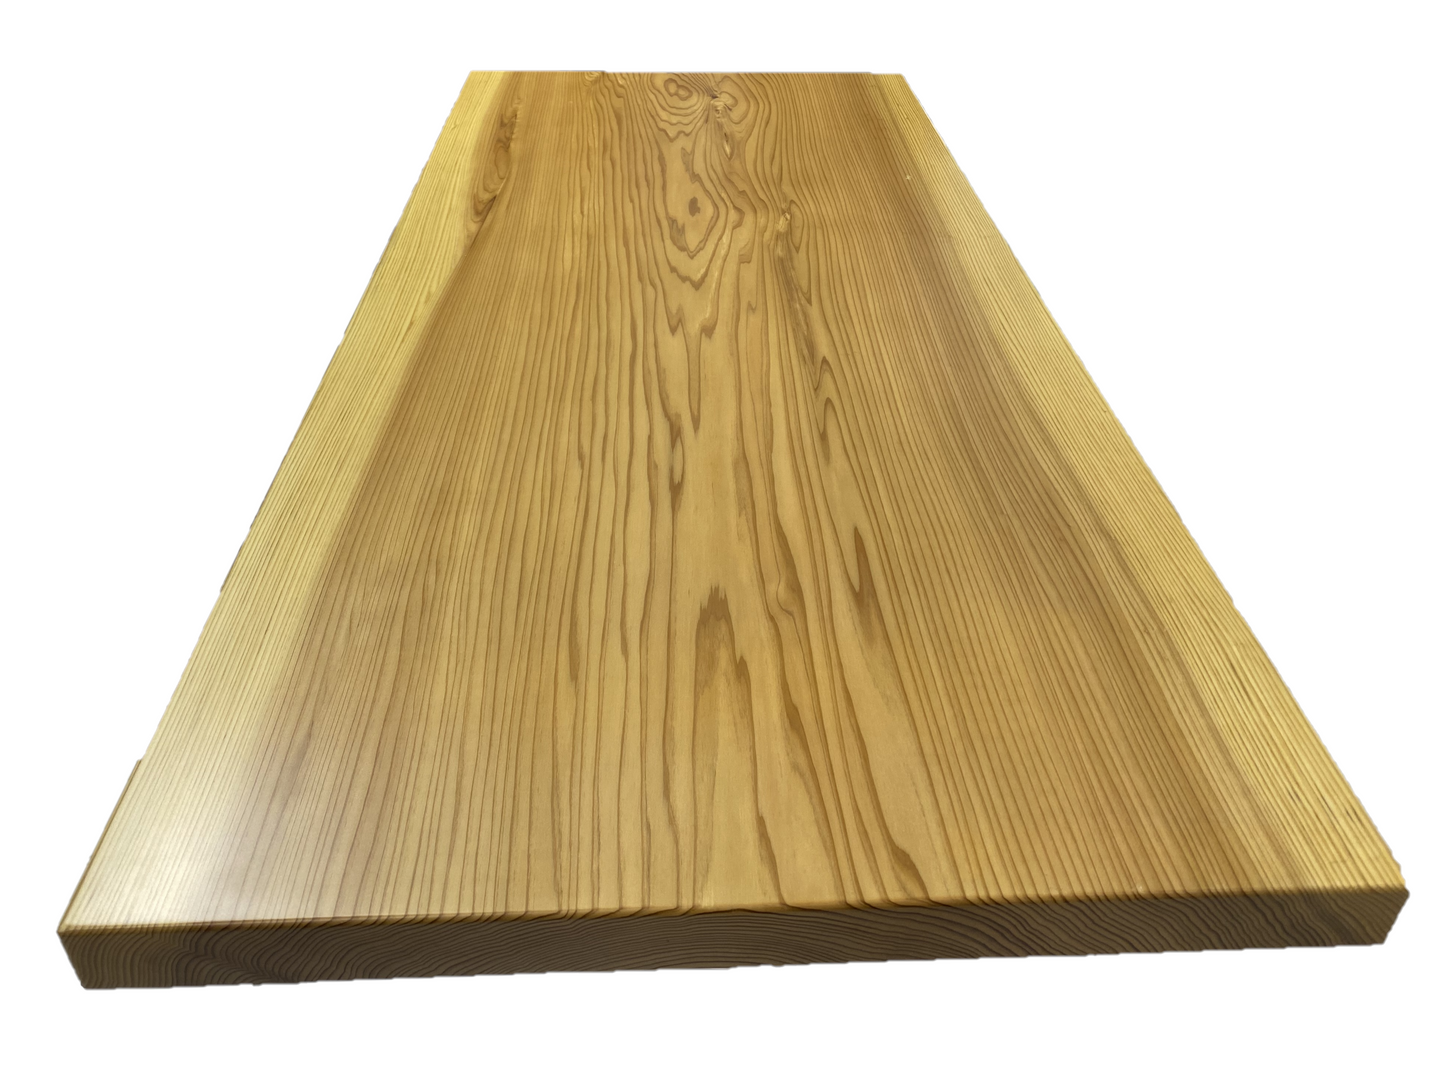 A0012 高知産杉無垢一枚板 テーブル天板 1,650mm×760mm×60mm